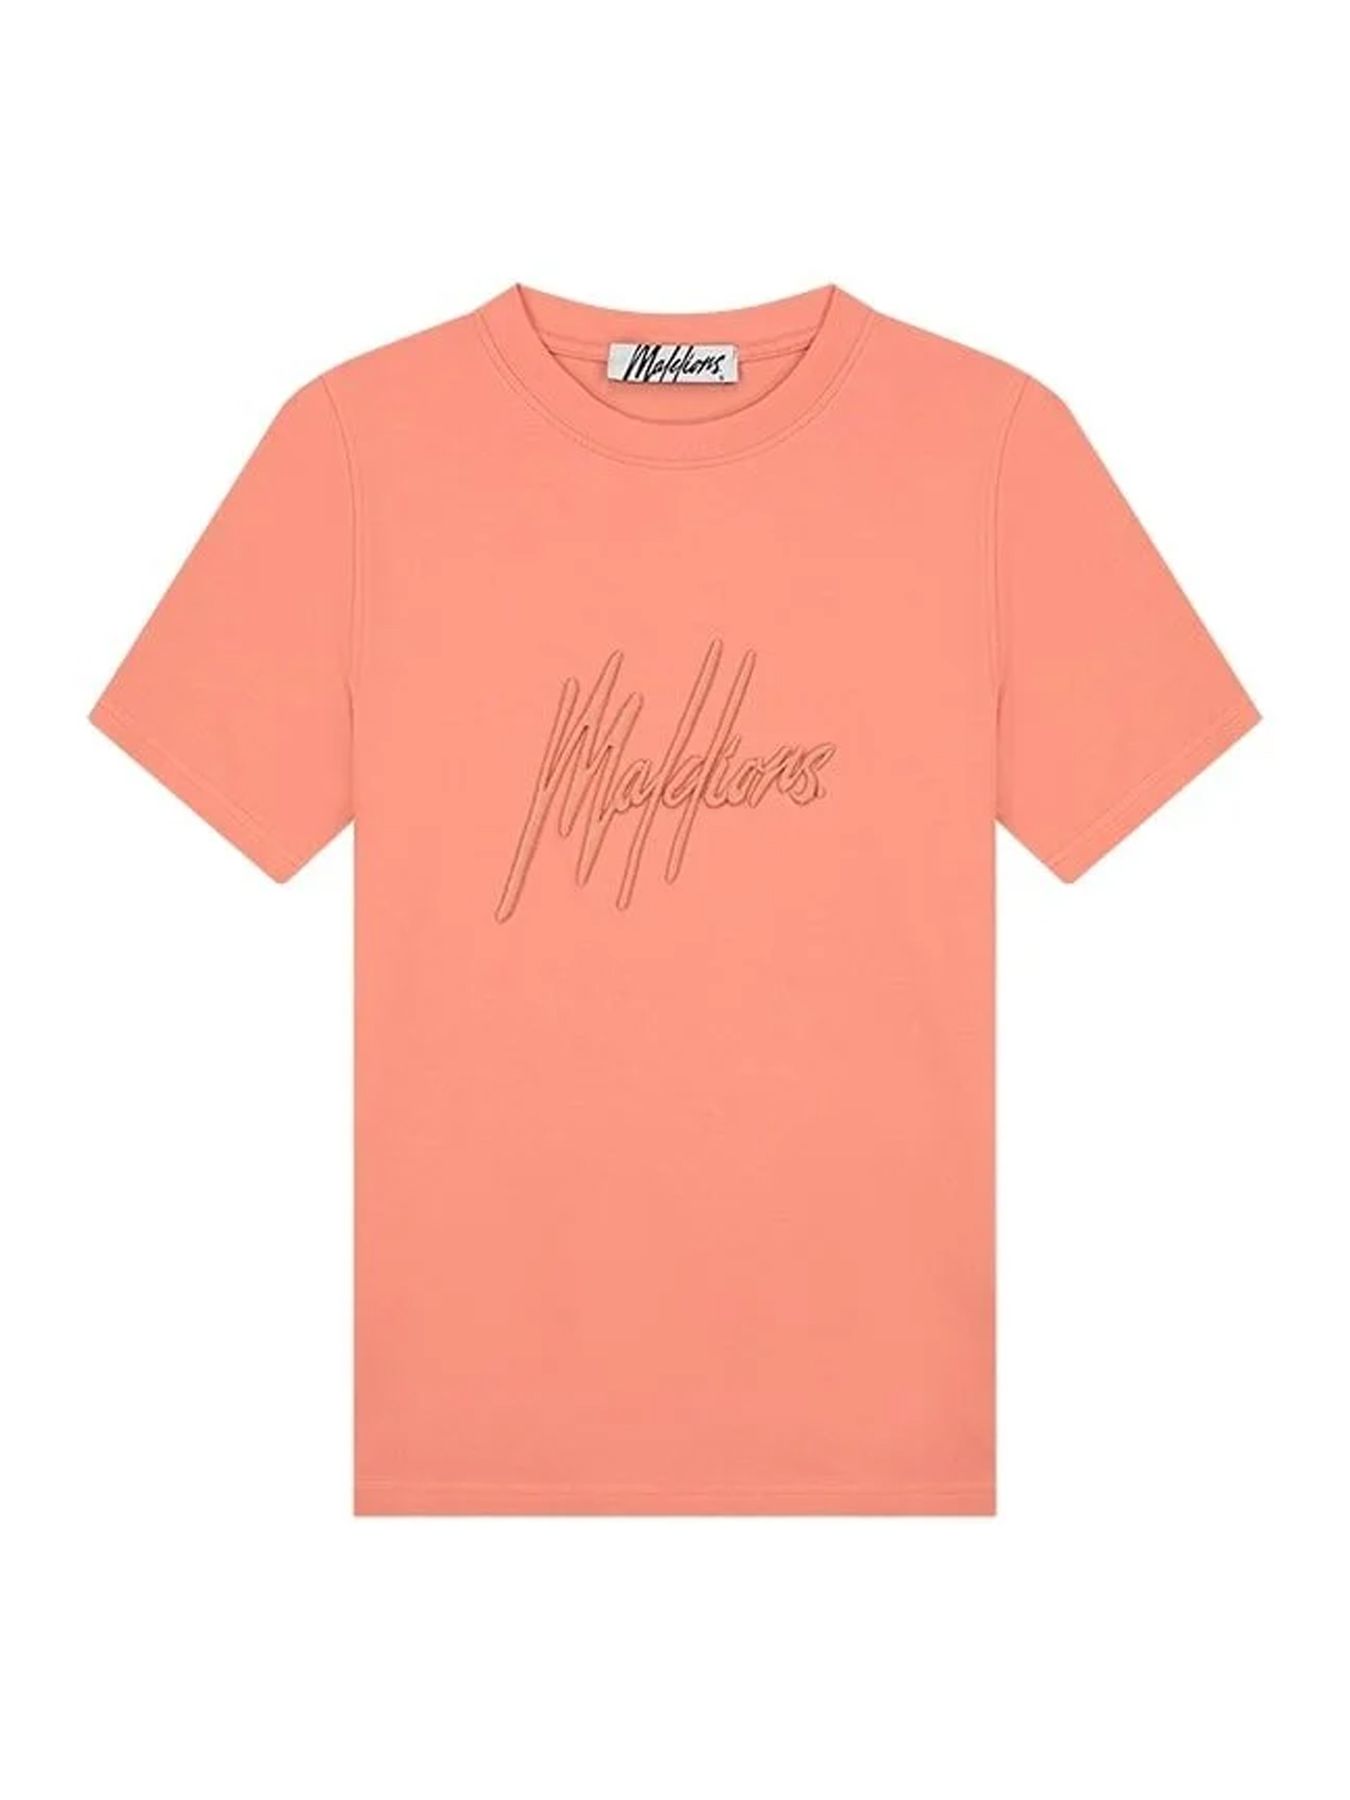 Malelions Women essentials t-shirt Coral 2900147838031